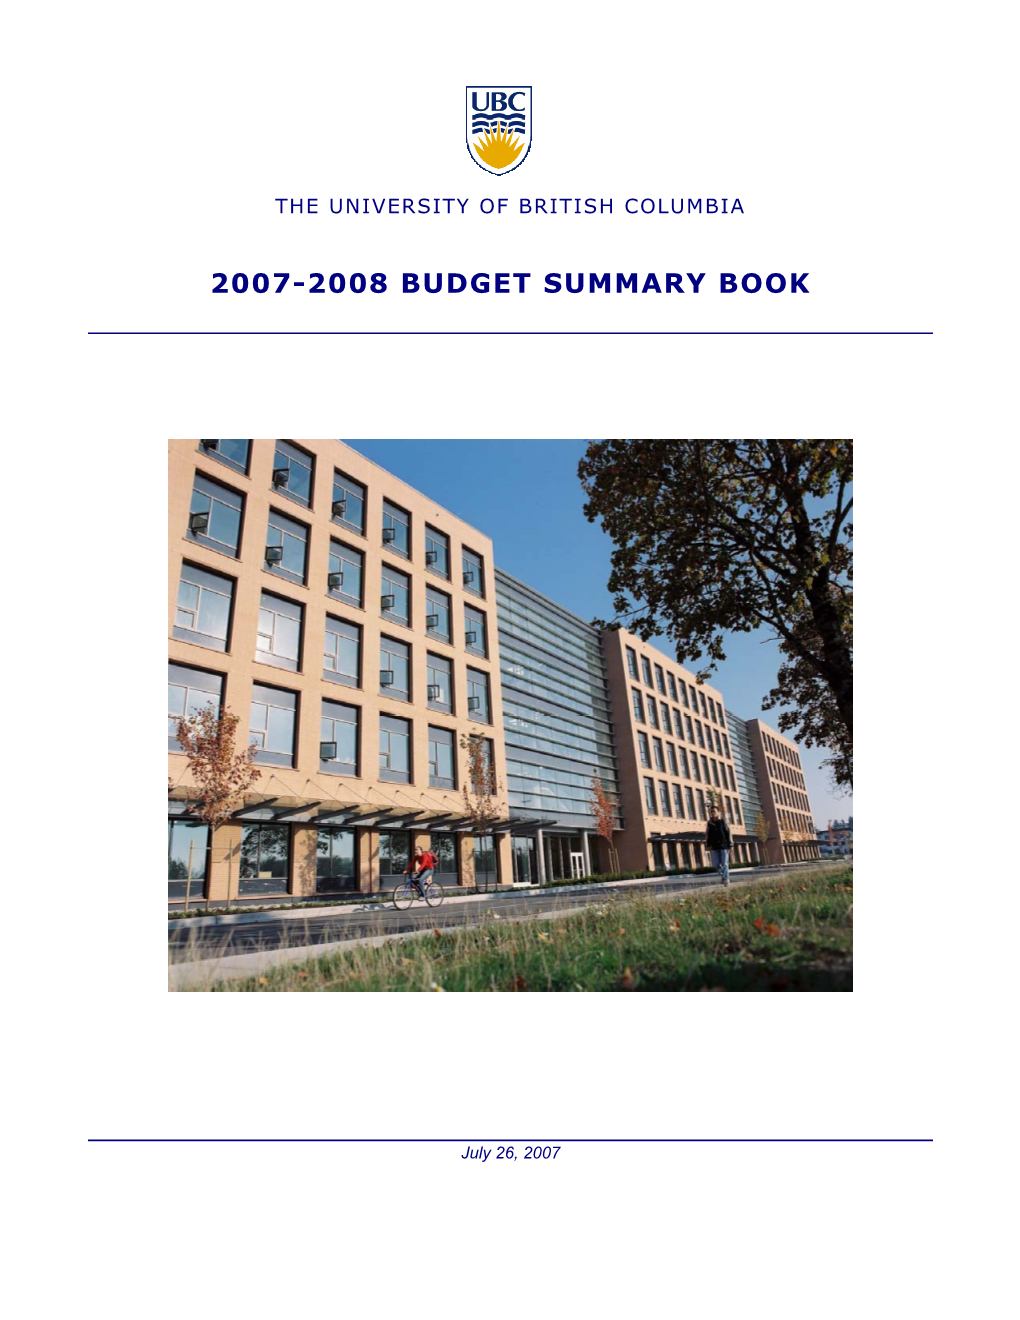 2007-2008 Budget Summary Book, University of British Columbia